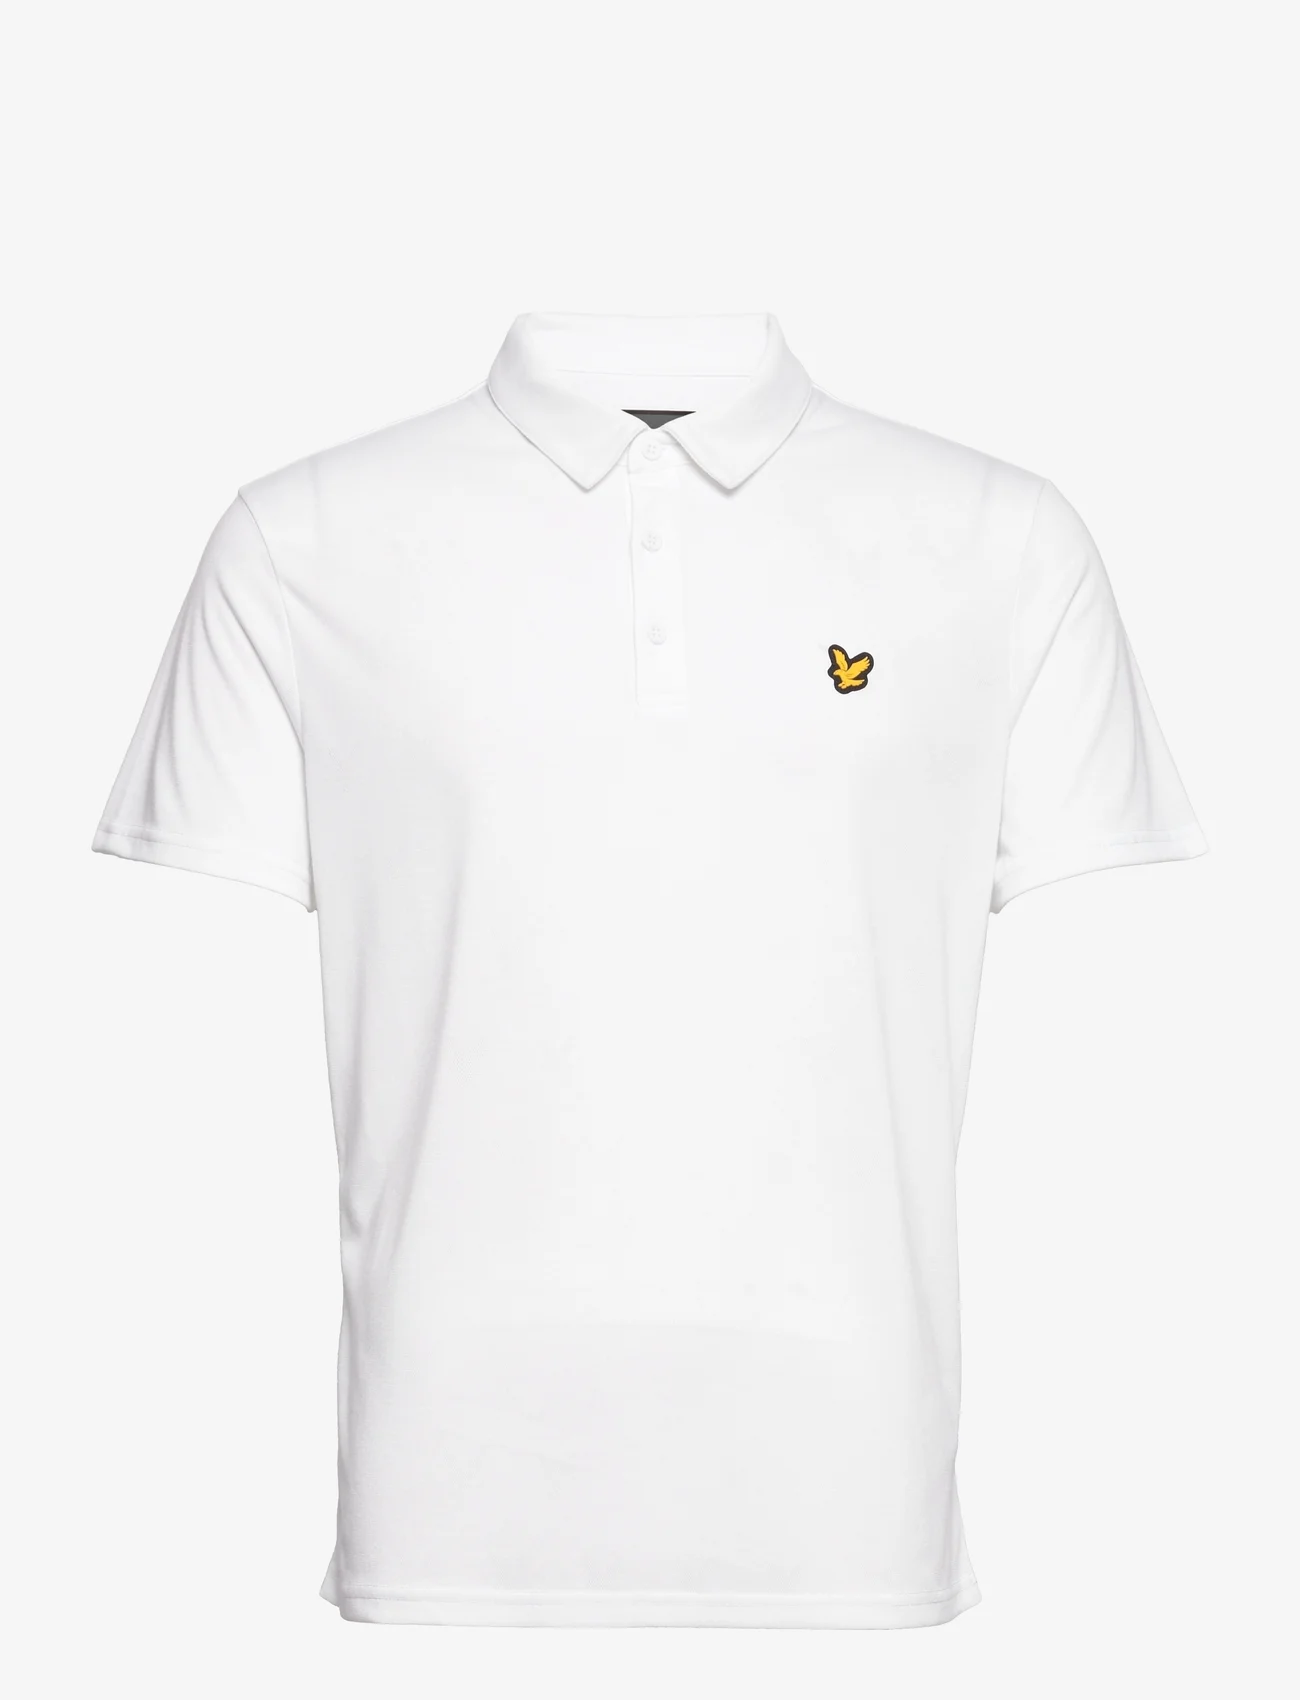 Lyle & Scott Sport - Jacquard Polo Shirt - kurzärmelig - white - 0